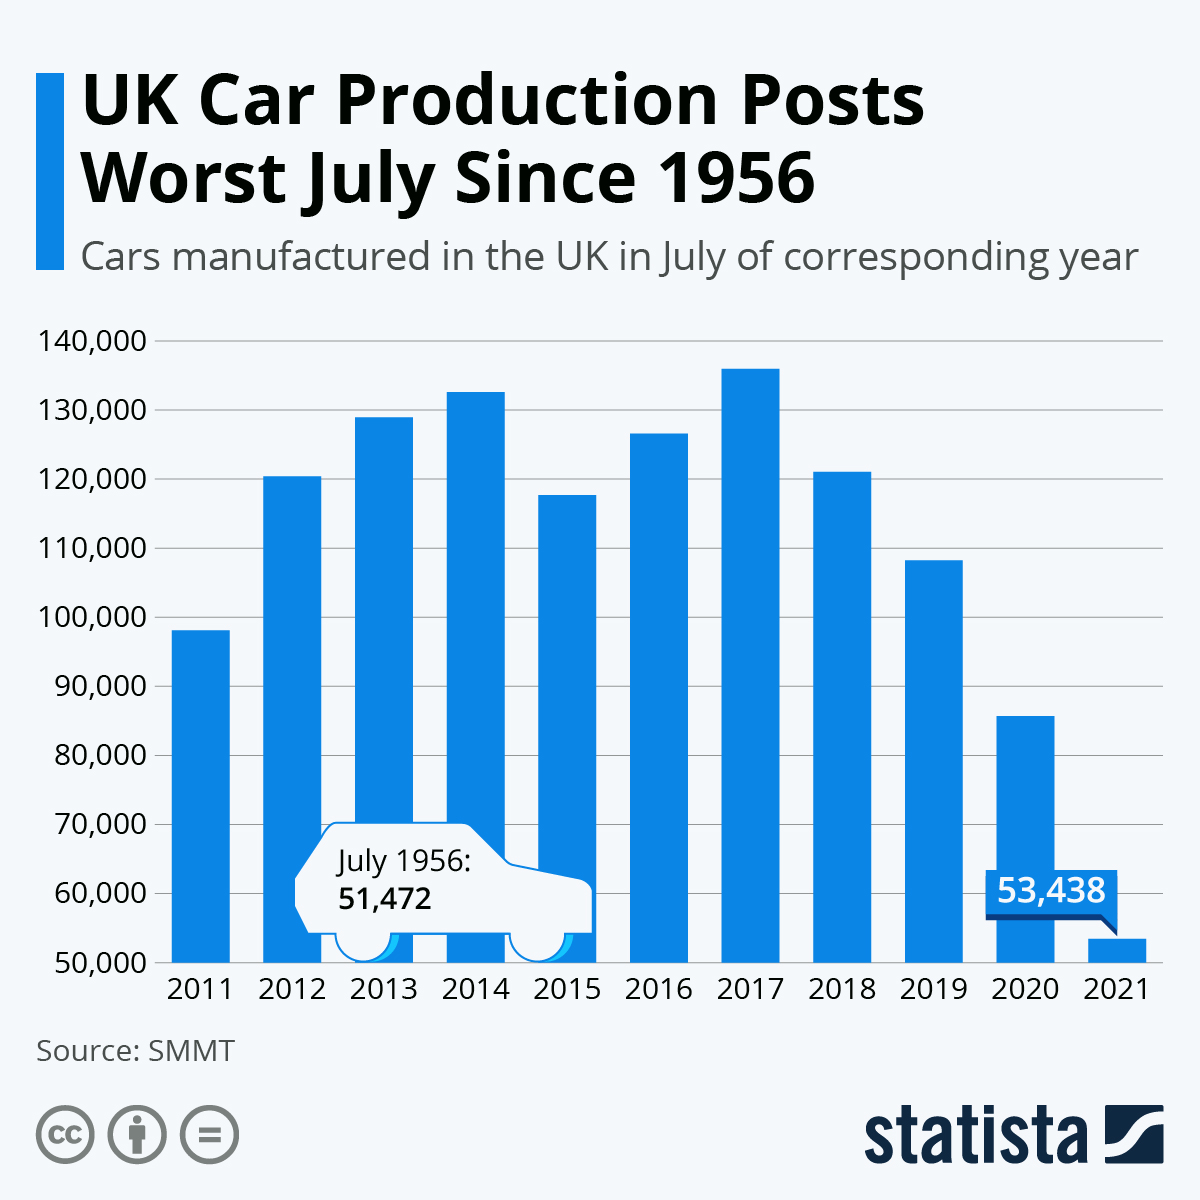 UK Car Production Posts Worst July Since 1956